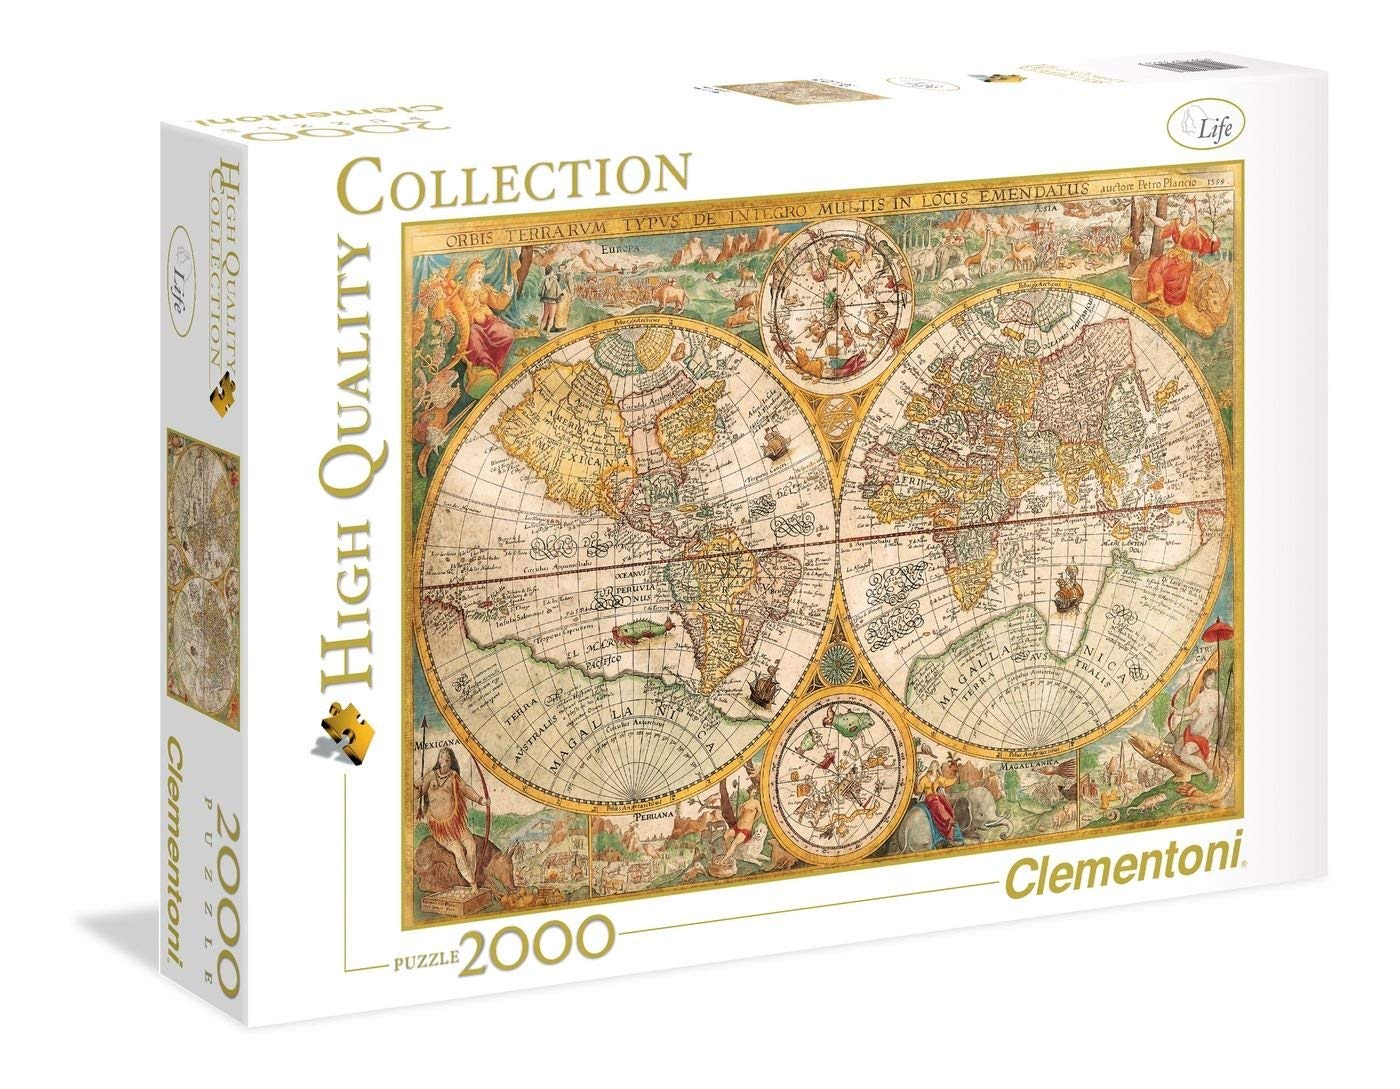 Clementoni Museum Collection Antique Map